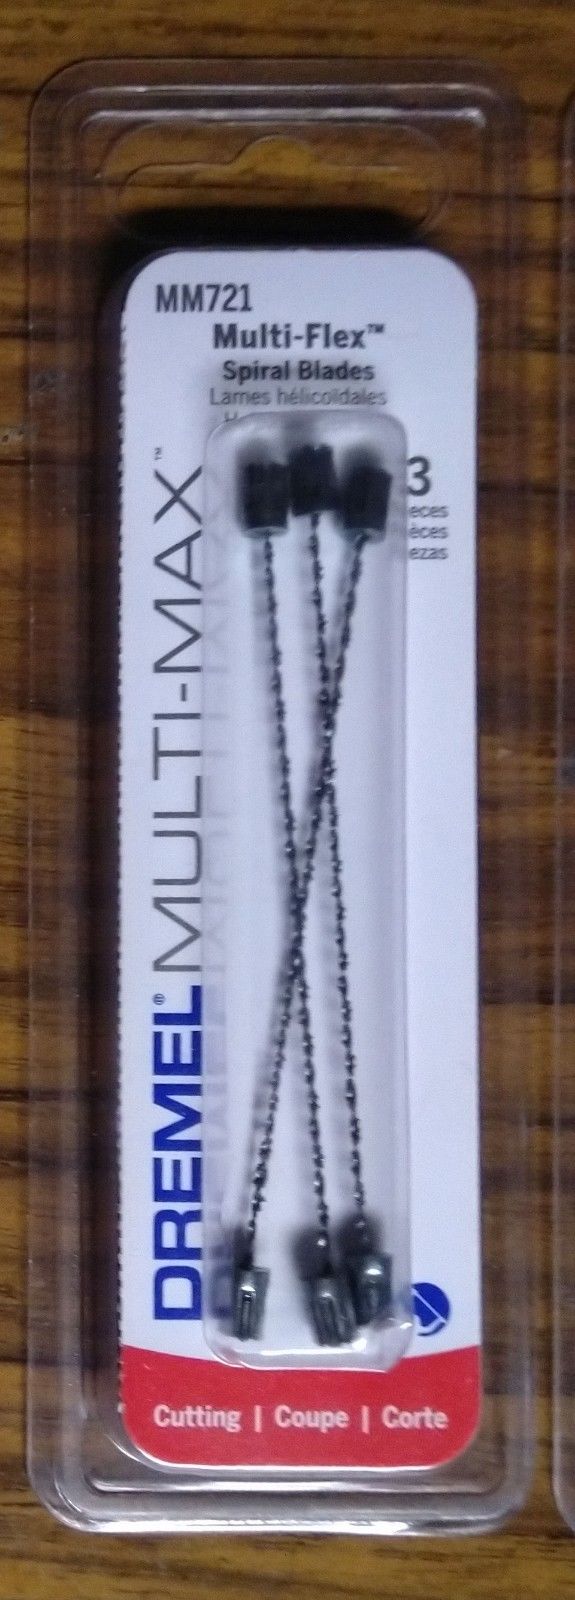 DREMEL MM721 Multi Max Spiral Blades 3-Pack